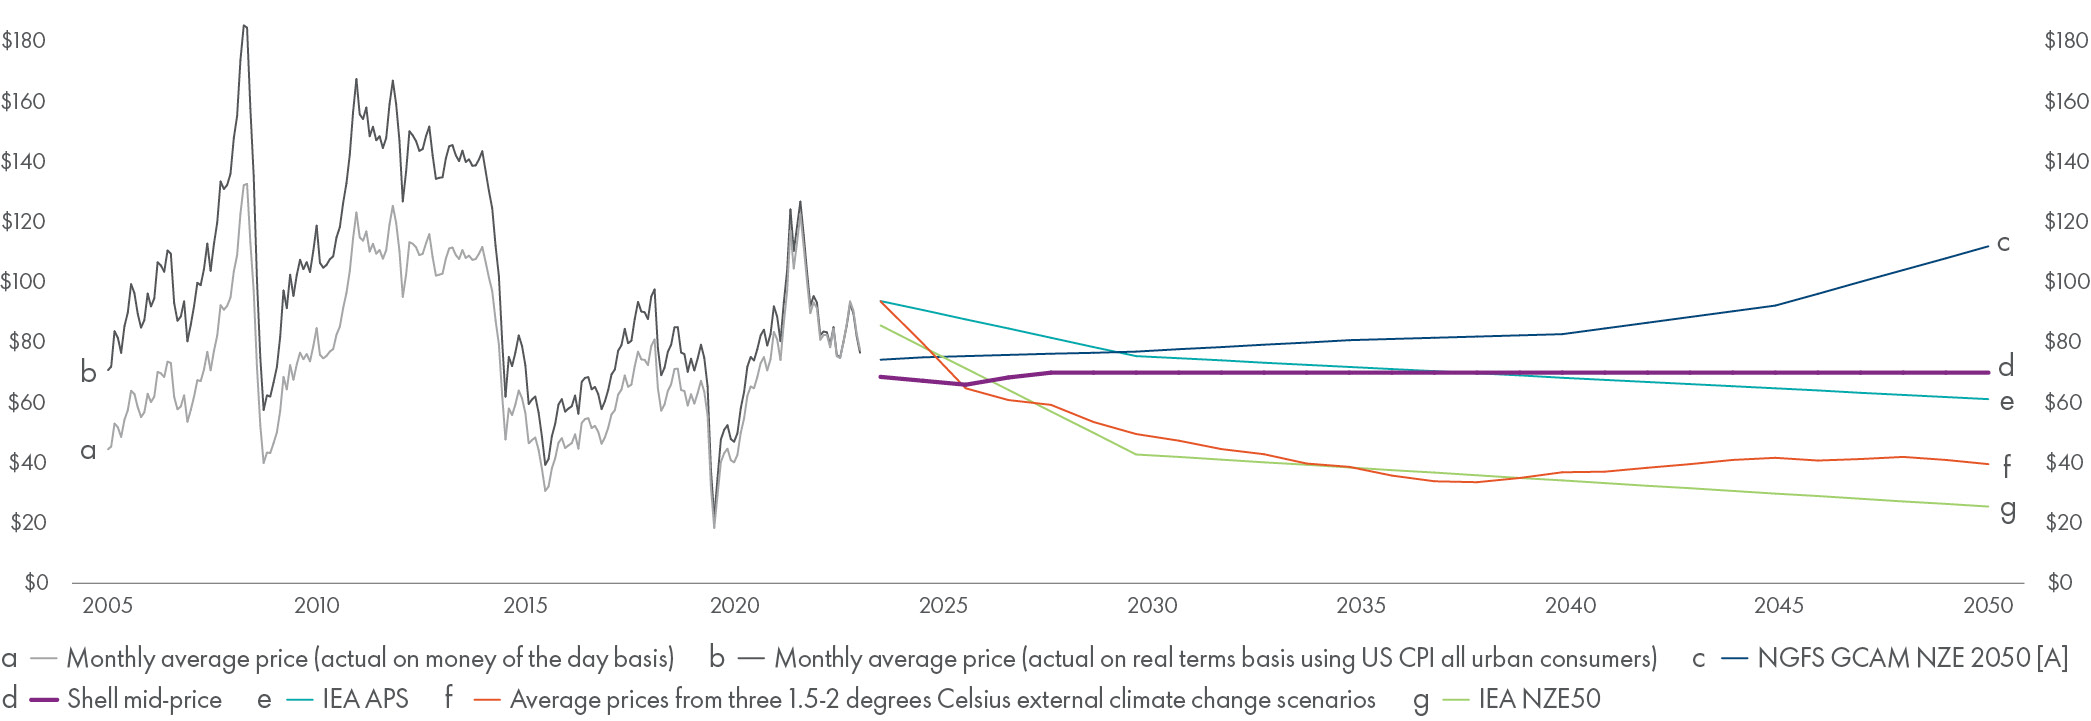 Oil_price_assumptions.jpg